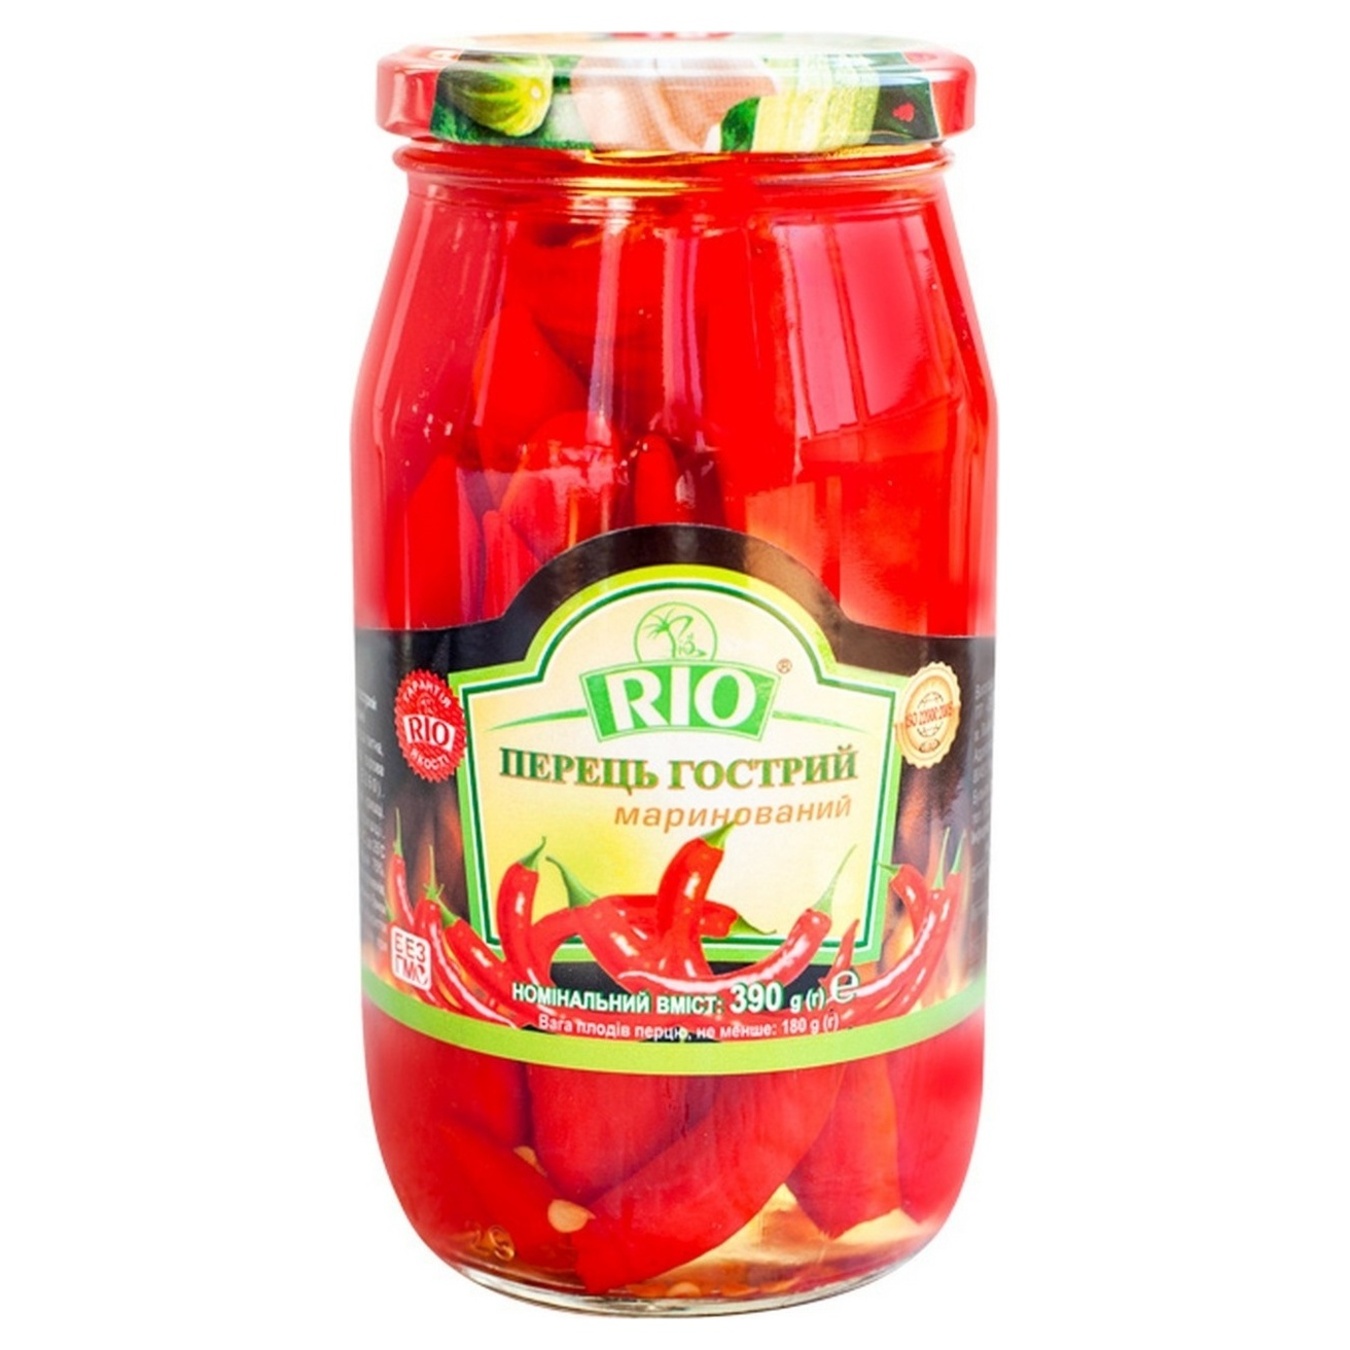 Spicy marinated RIO pepper 390g